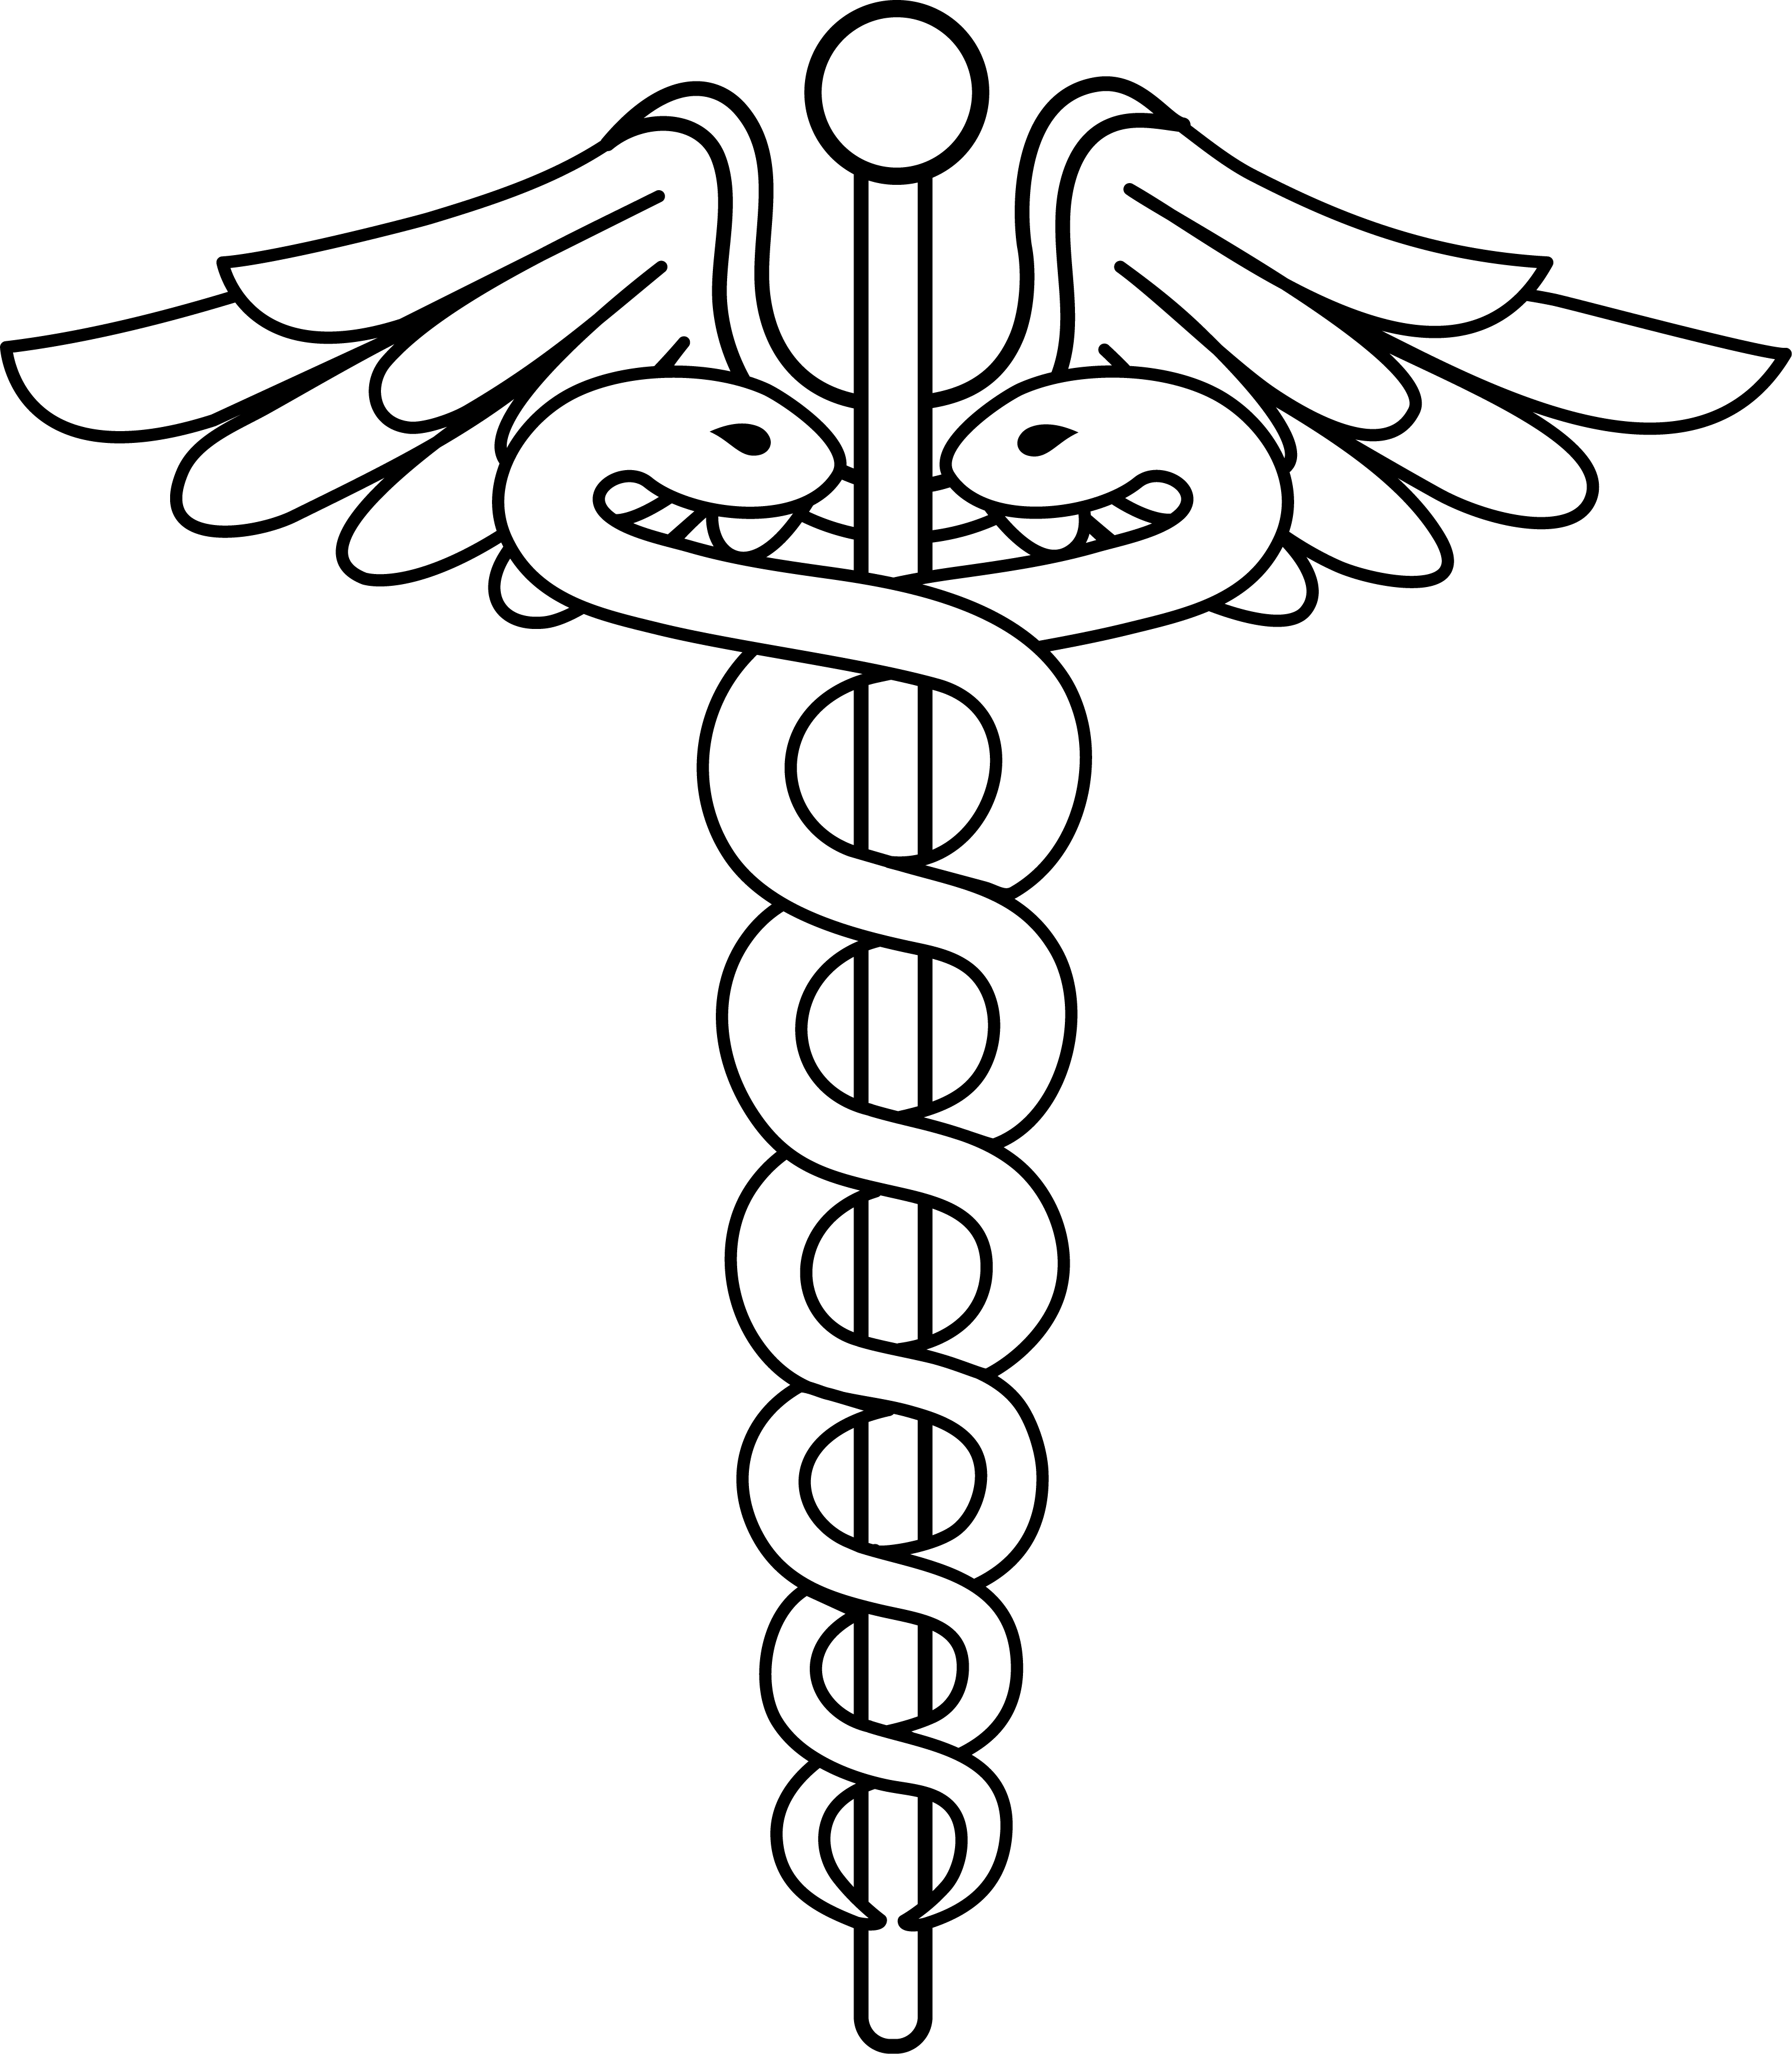 Free medical symbol.